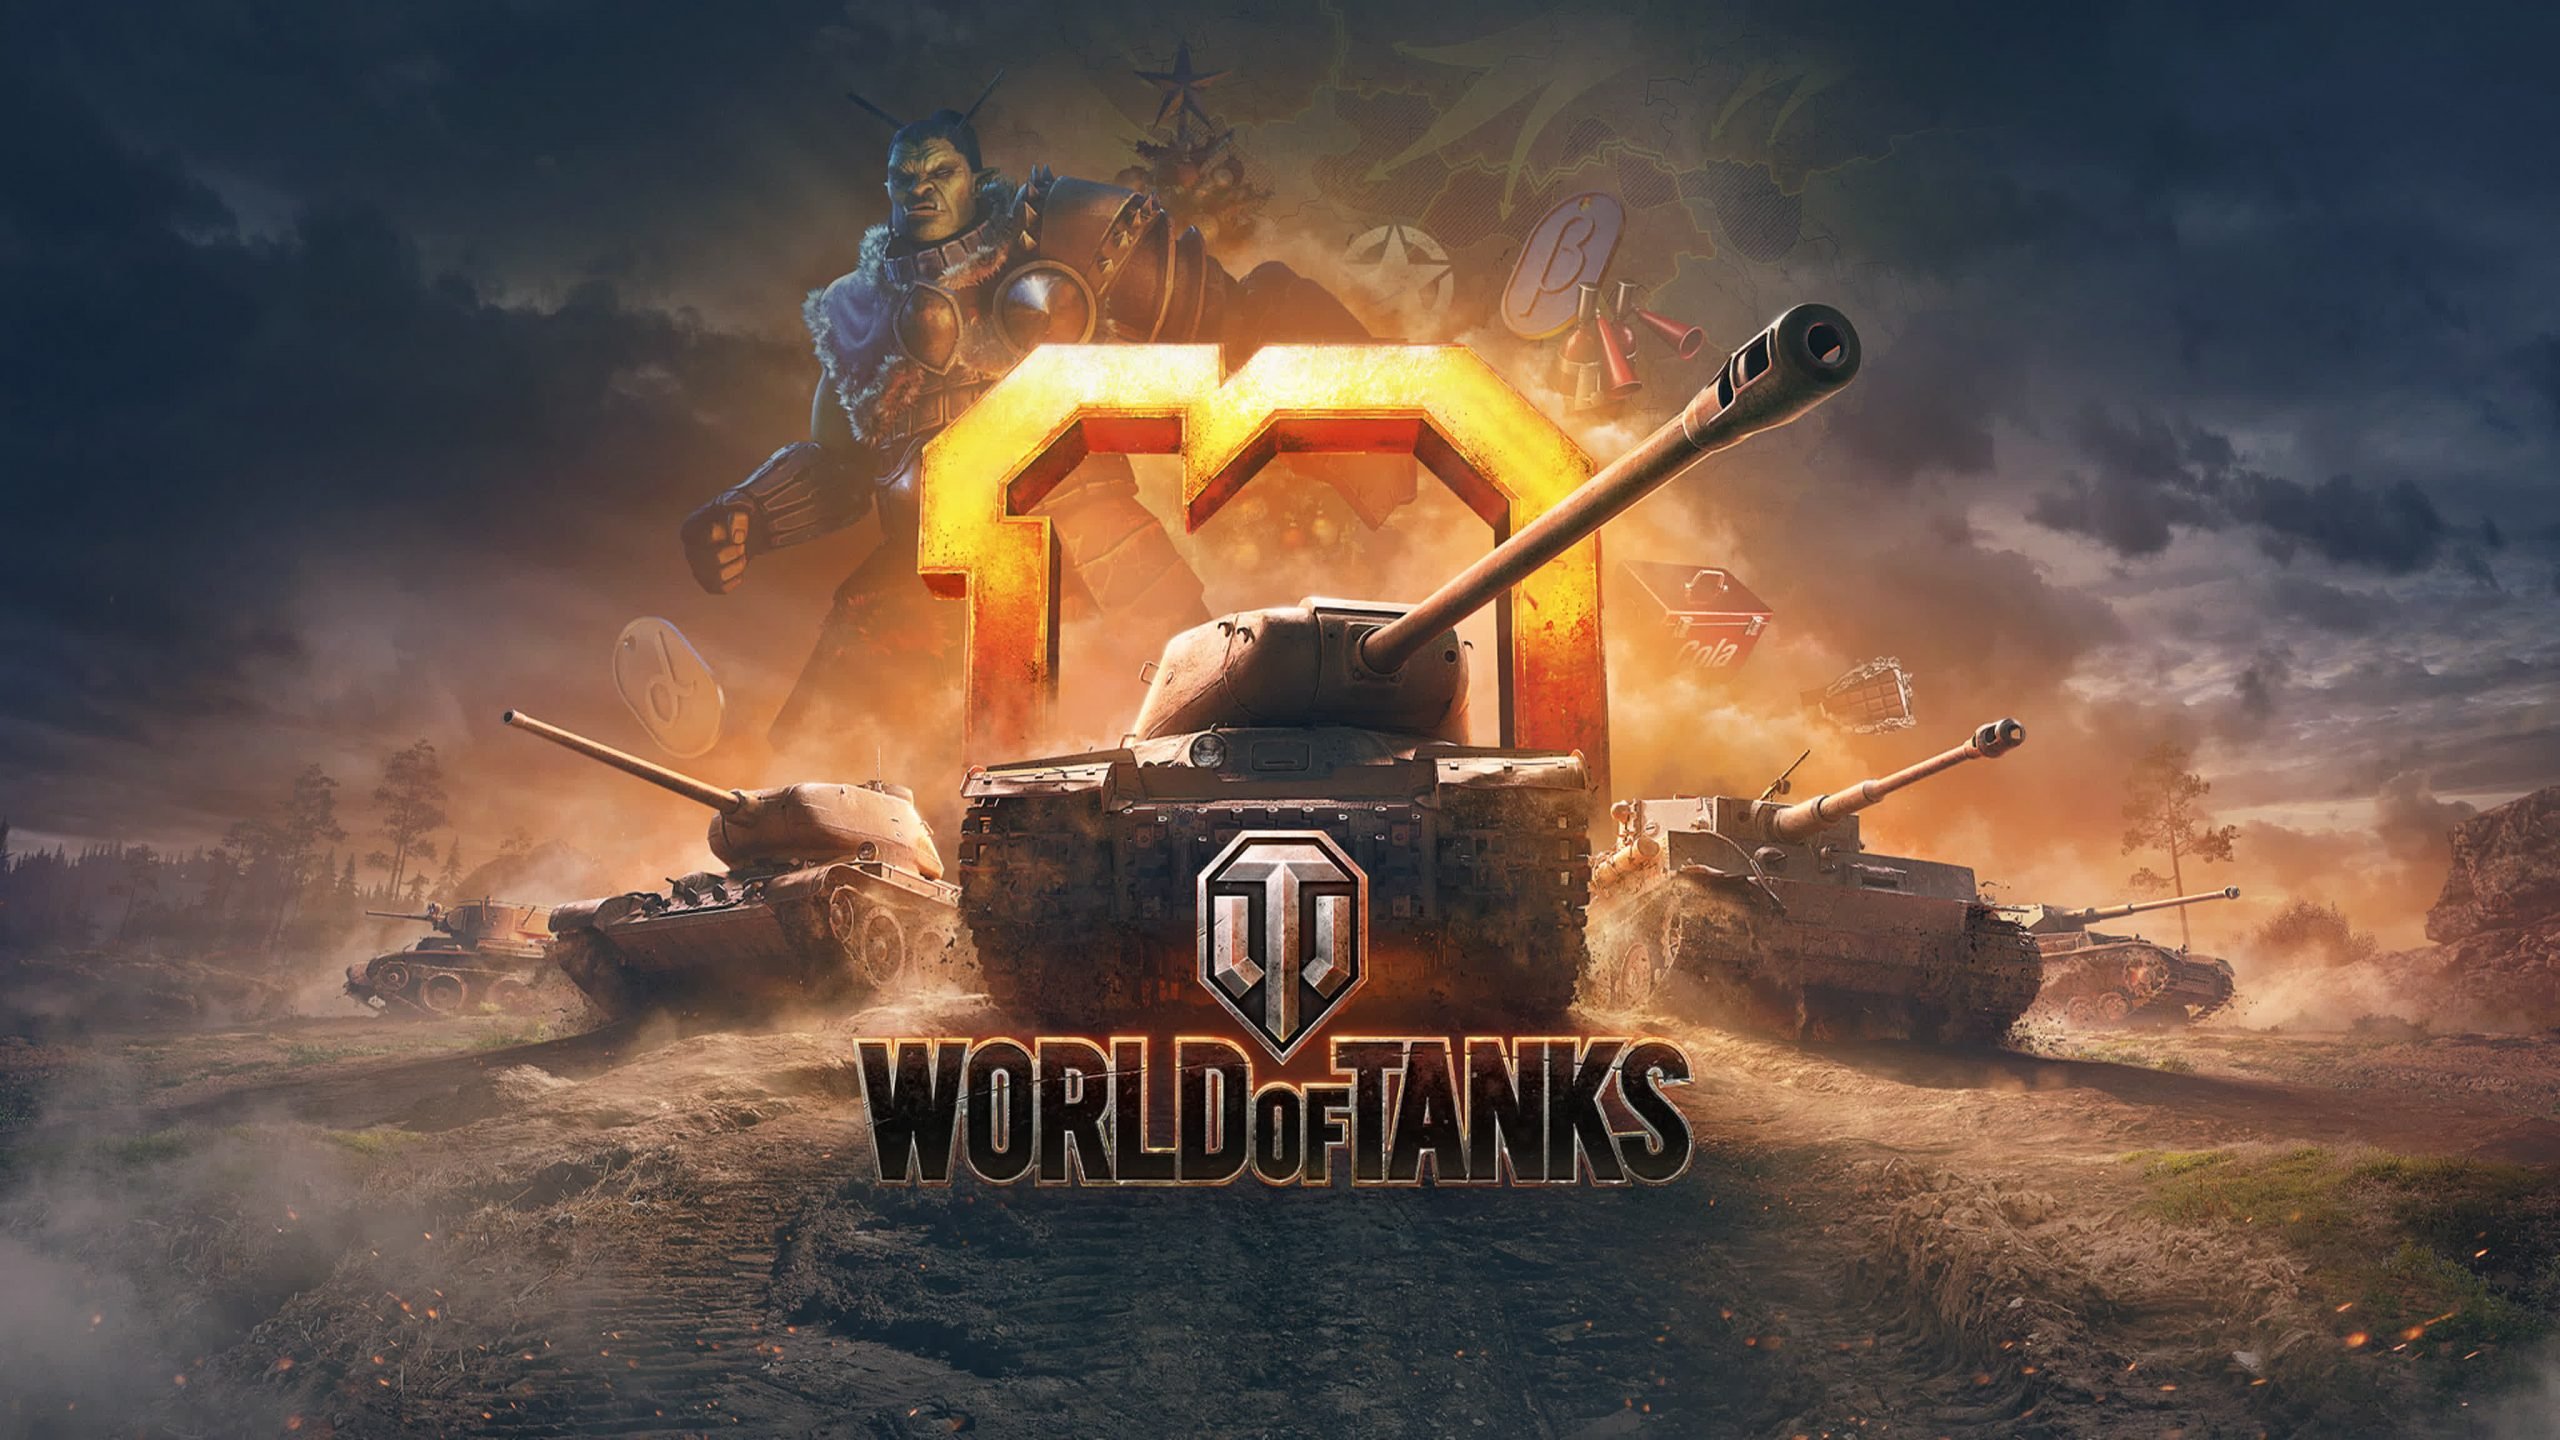 Worldoftanks exe. Игра World of Tanks. Танкифworld of Tanks. WOT картинки. World of Tanks обои на рабочий стол.